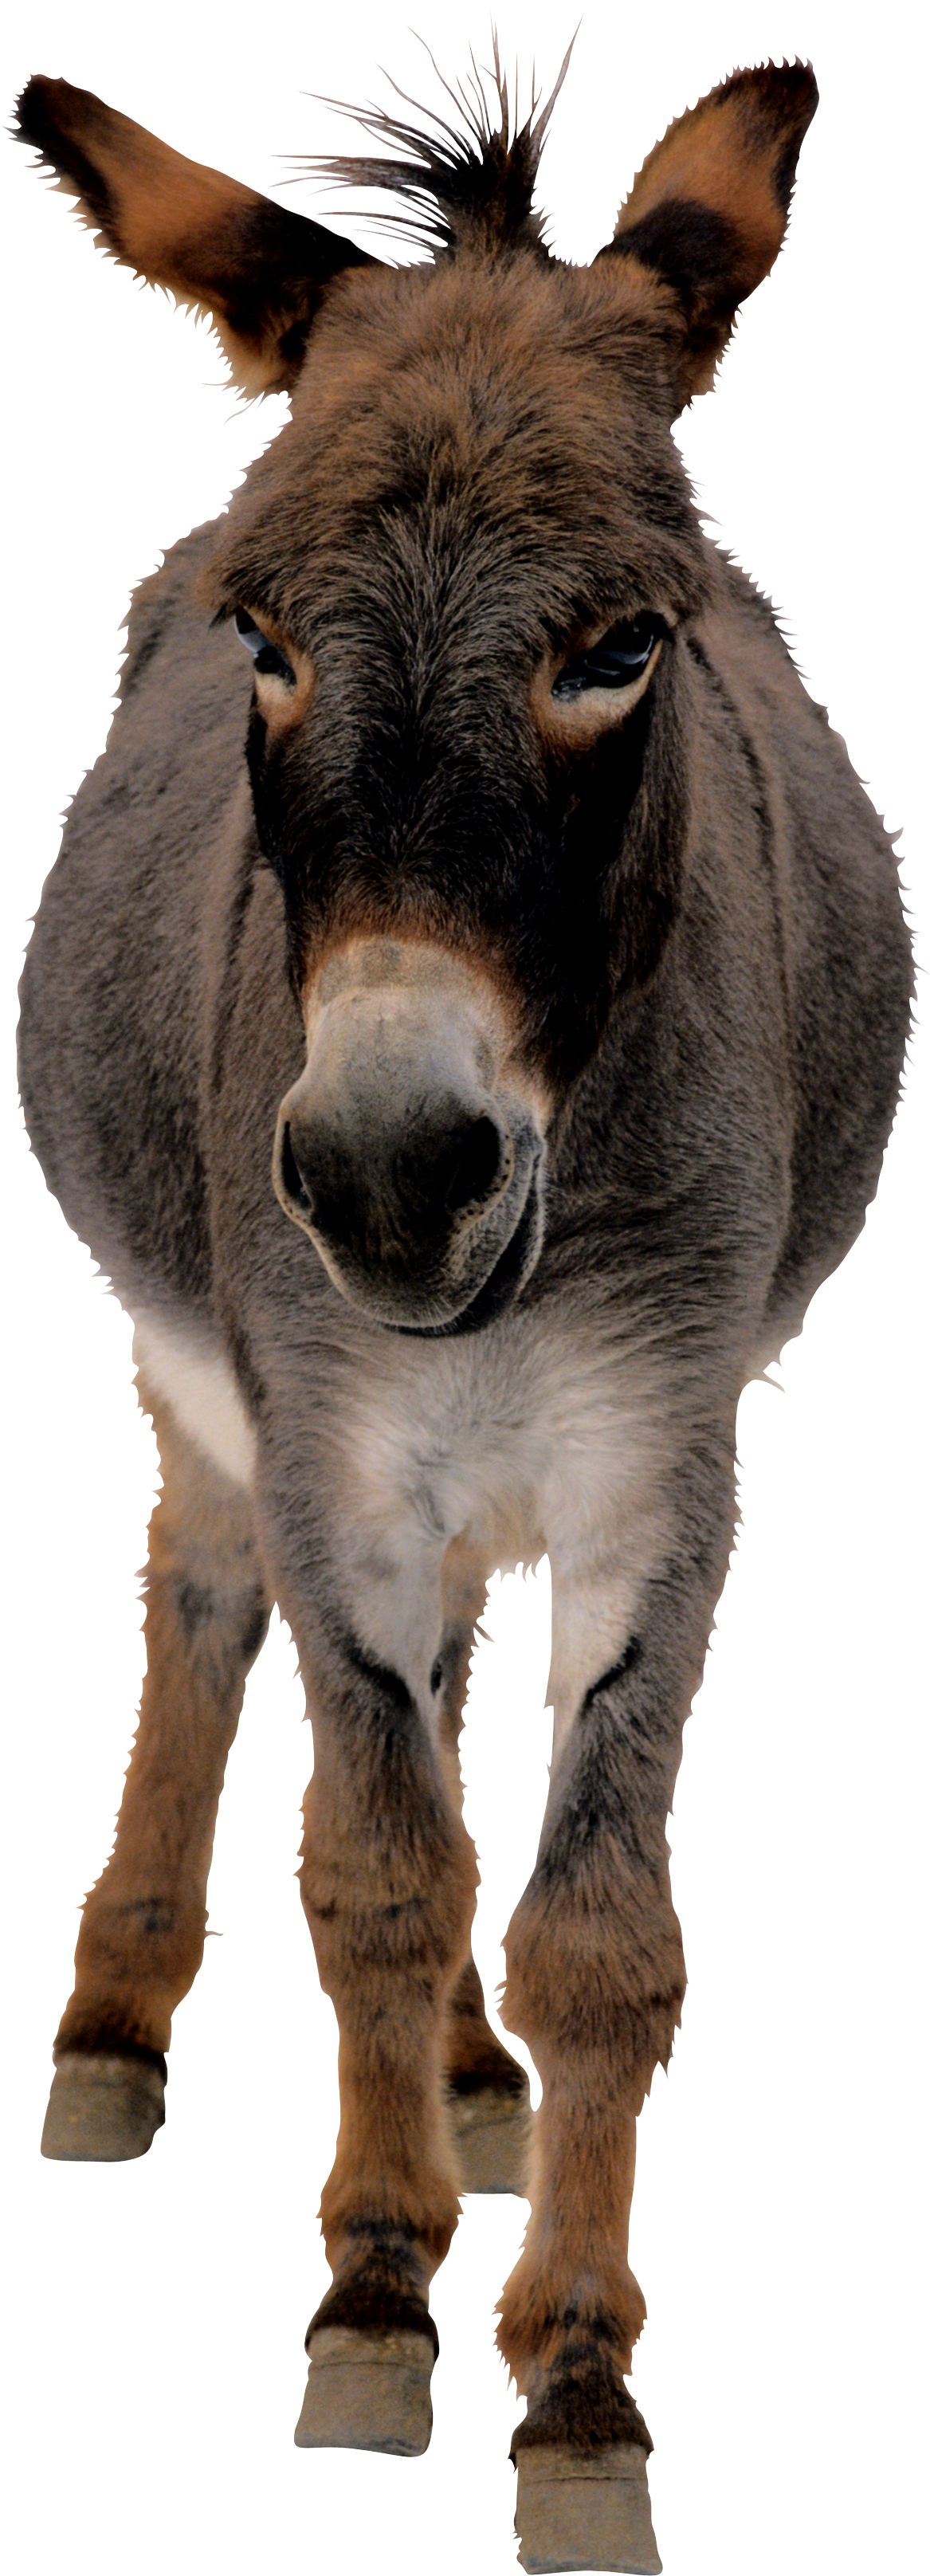 Download PNG image - Donkey Mule PNG Transparent Image 